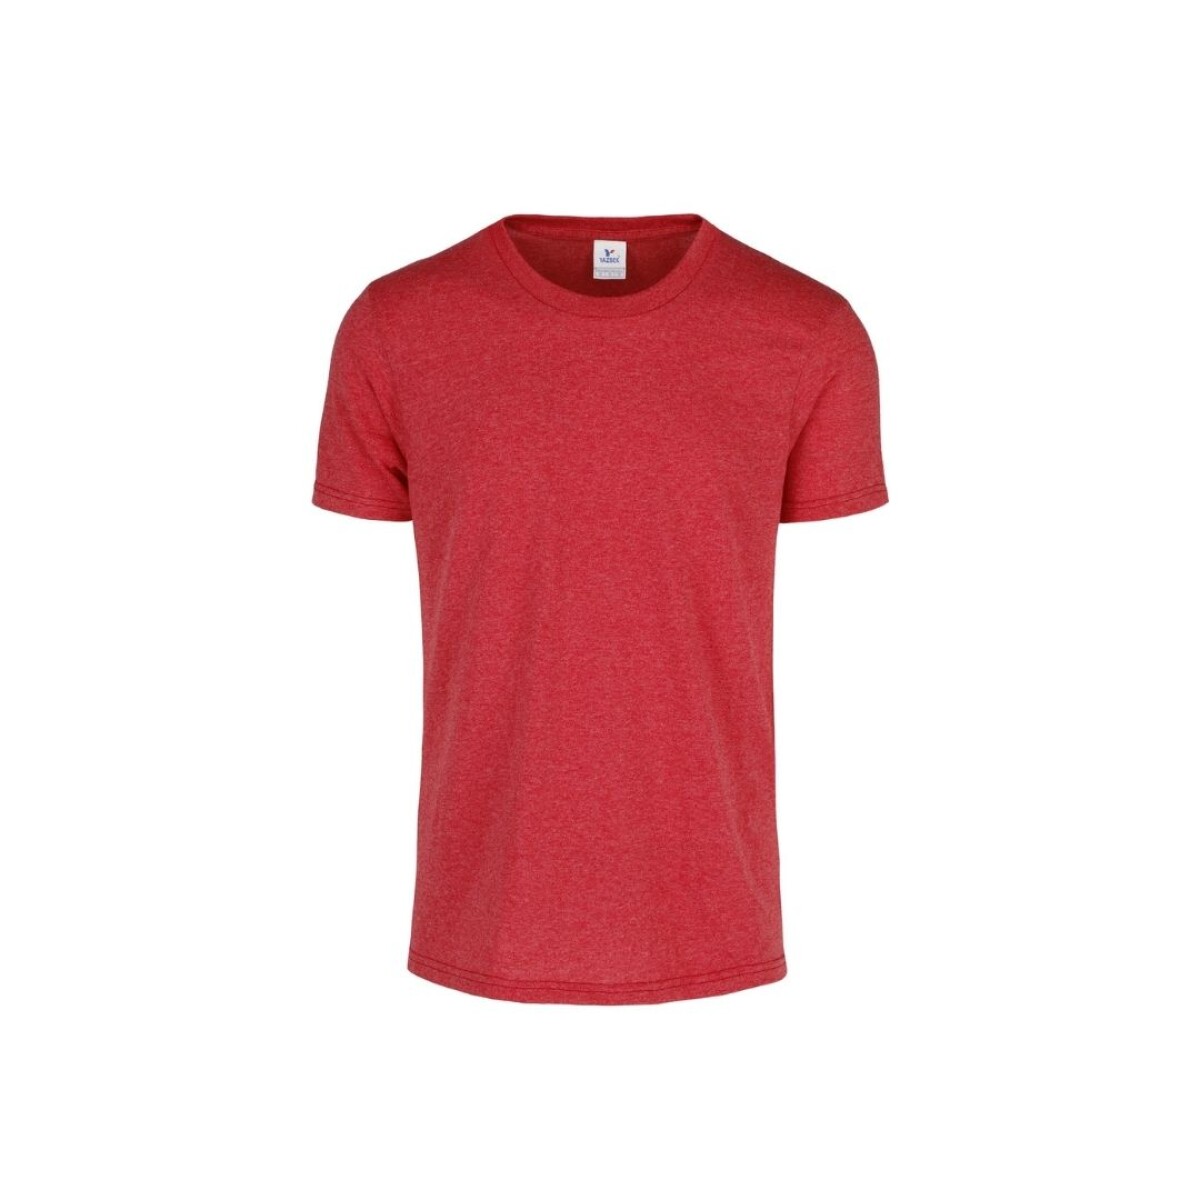 Camiseta a la base jaspe - Rojo jaspe 